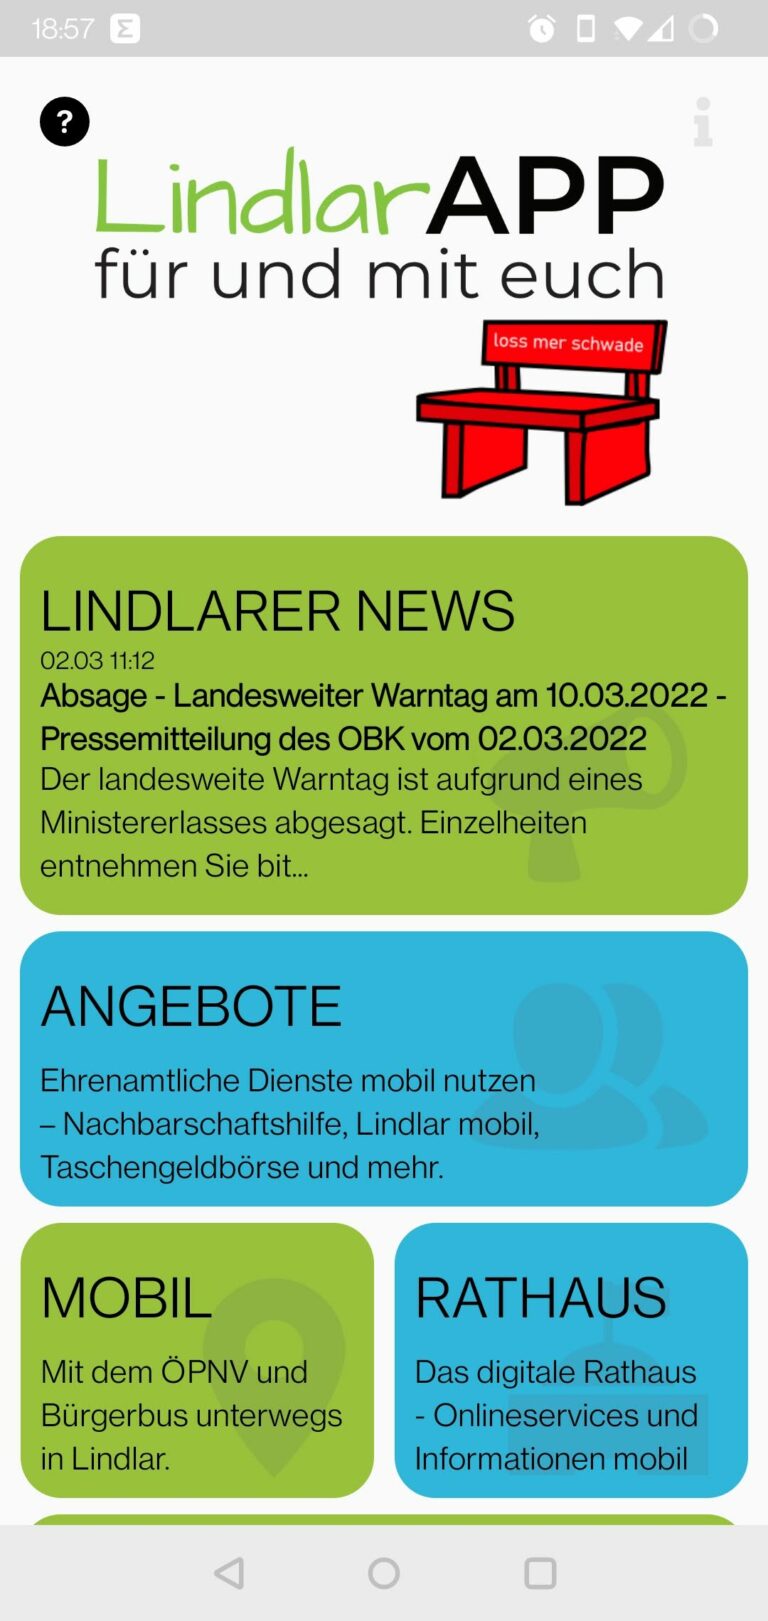 LindlarApp - Startseite